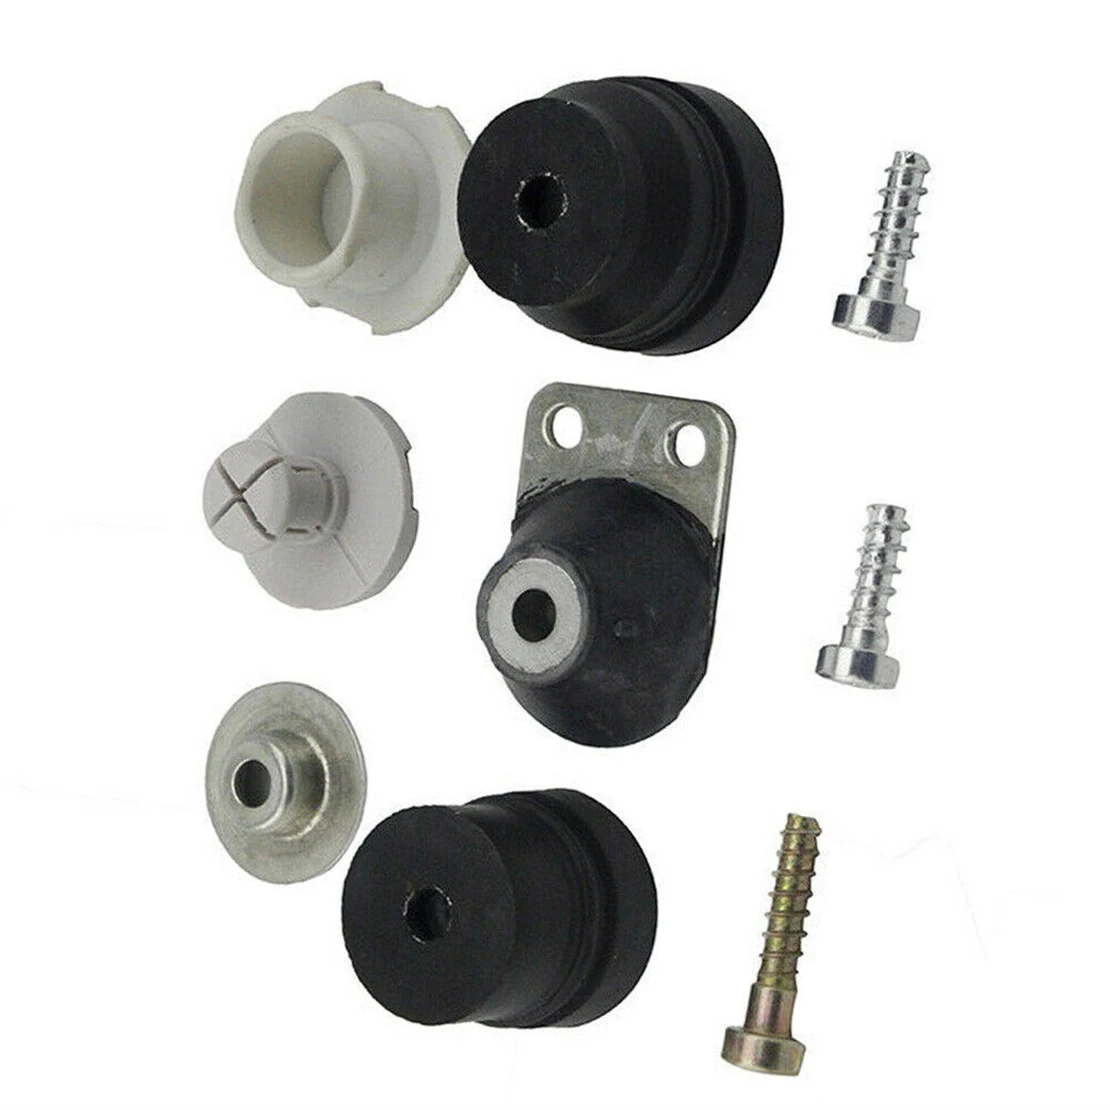 Anti-Vibration Buffer Set Screw Plug Cap Mount Kit 1121 790 9909 fit for Stihl 026 024 MS240 MS260 Chainsaw